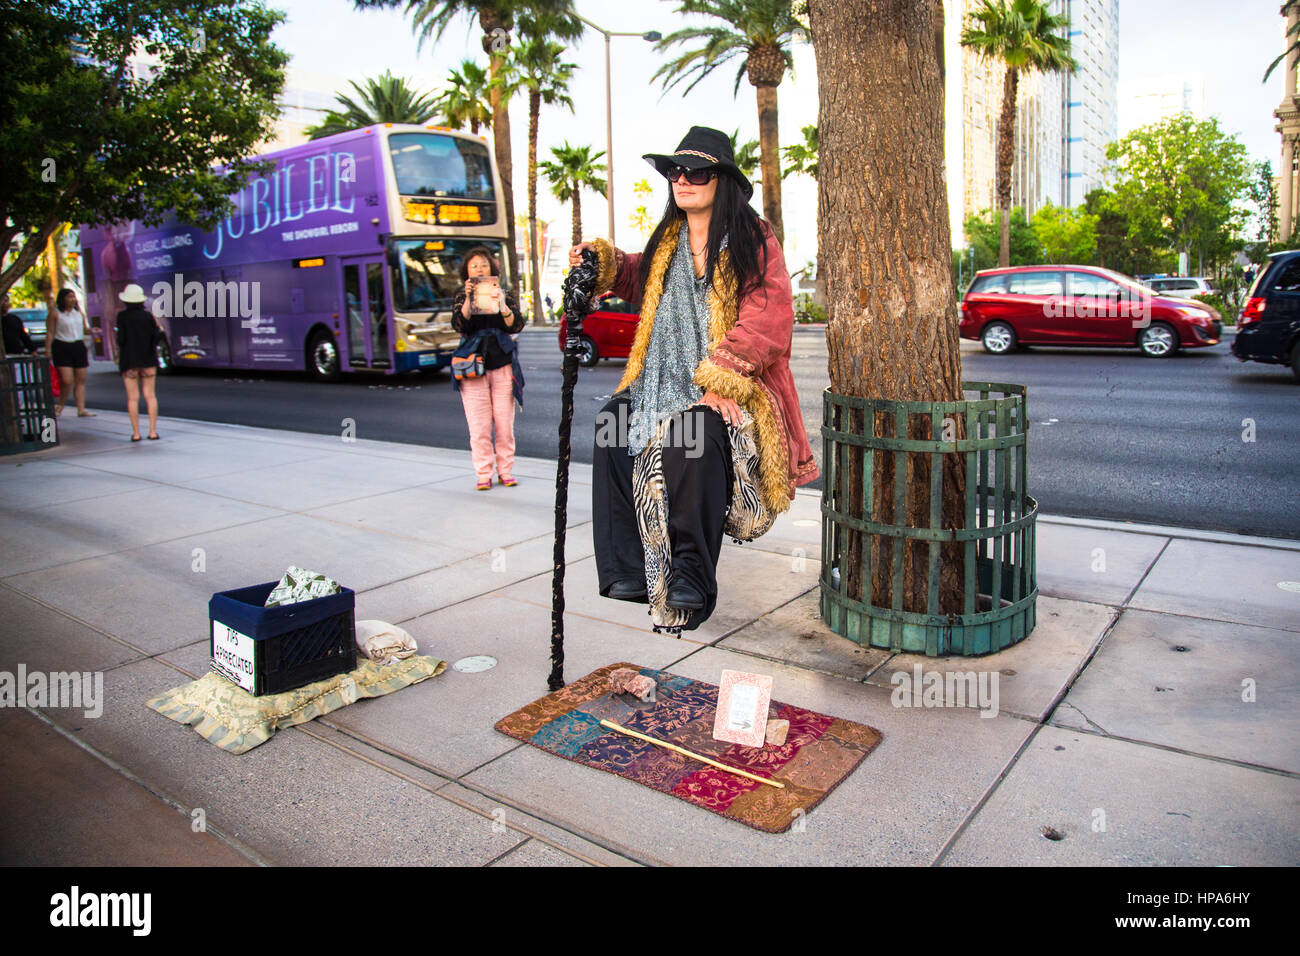 LAS VEGAS, NEVADA - MAY 7, 2014: View of Street performer doing levitation act along Las Vegas Boulevard. Stock Photo